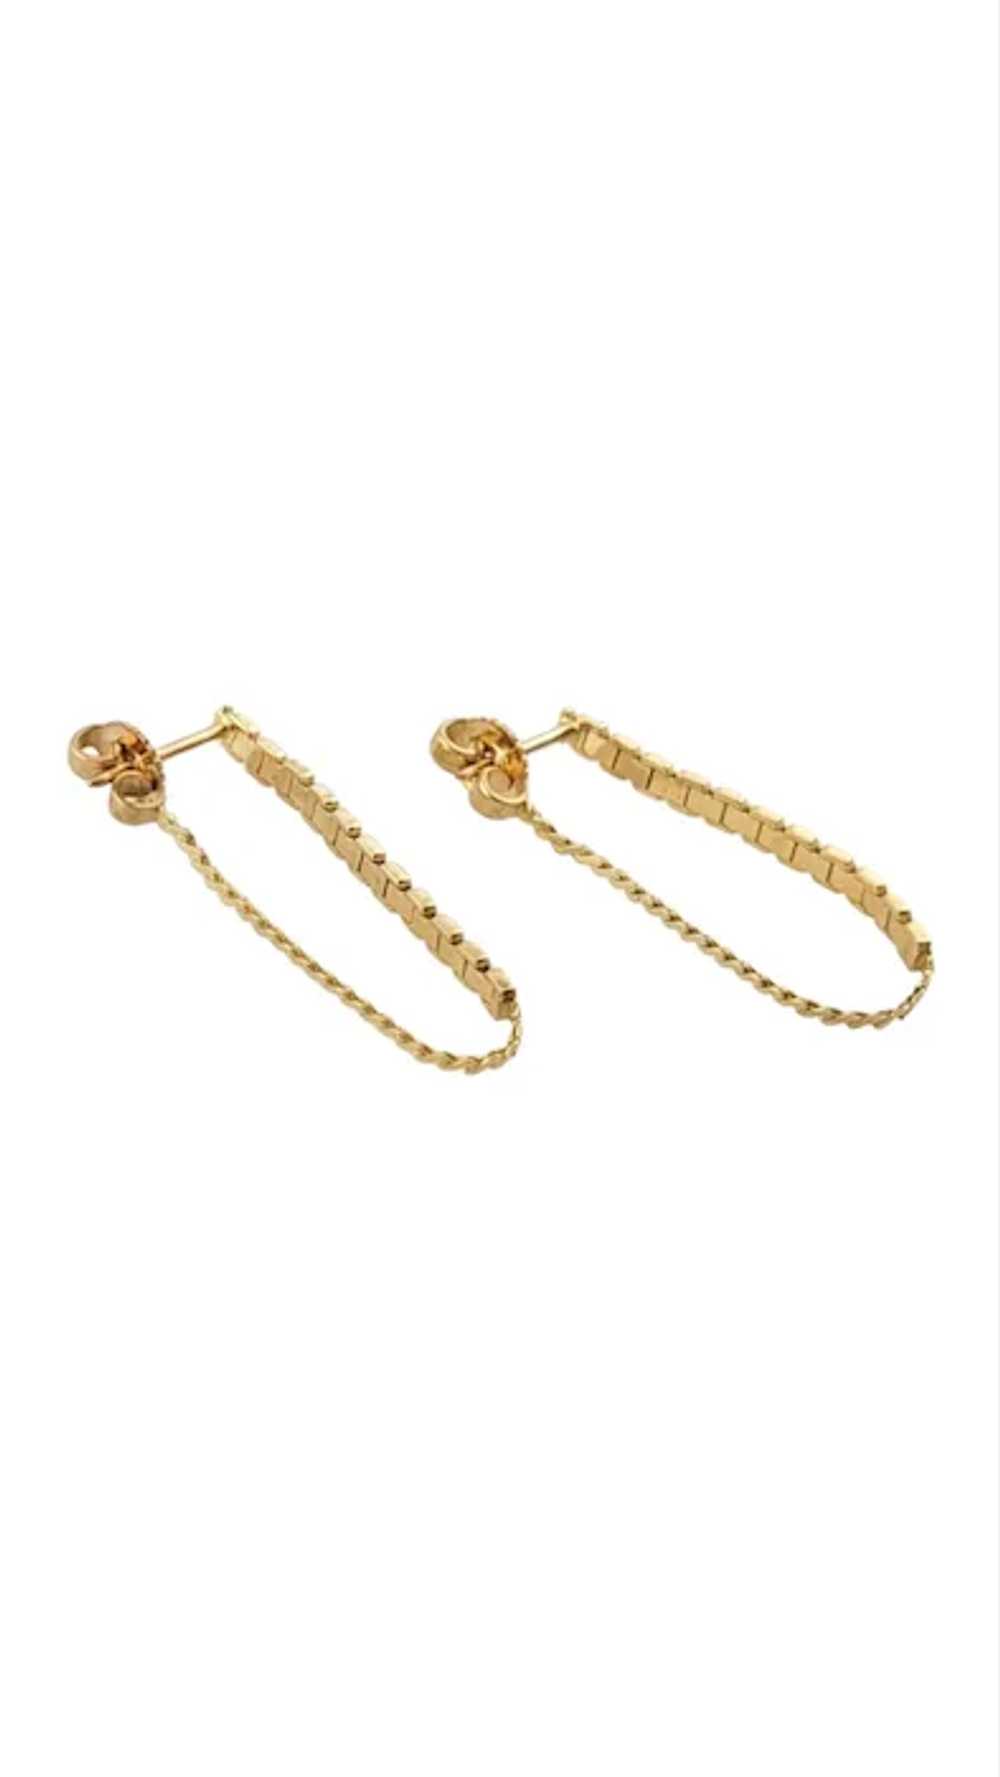 Vintage 10K Yellow Gold Chain Dangle Earrings - image 3